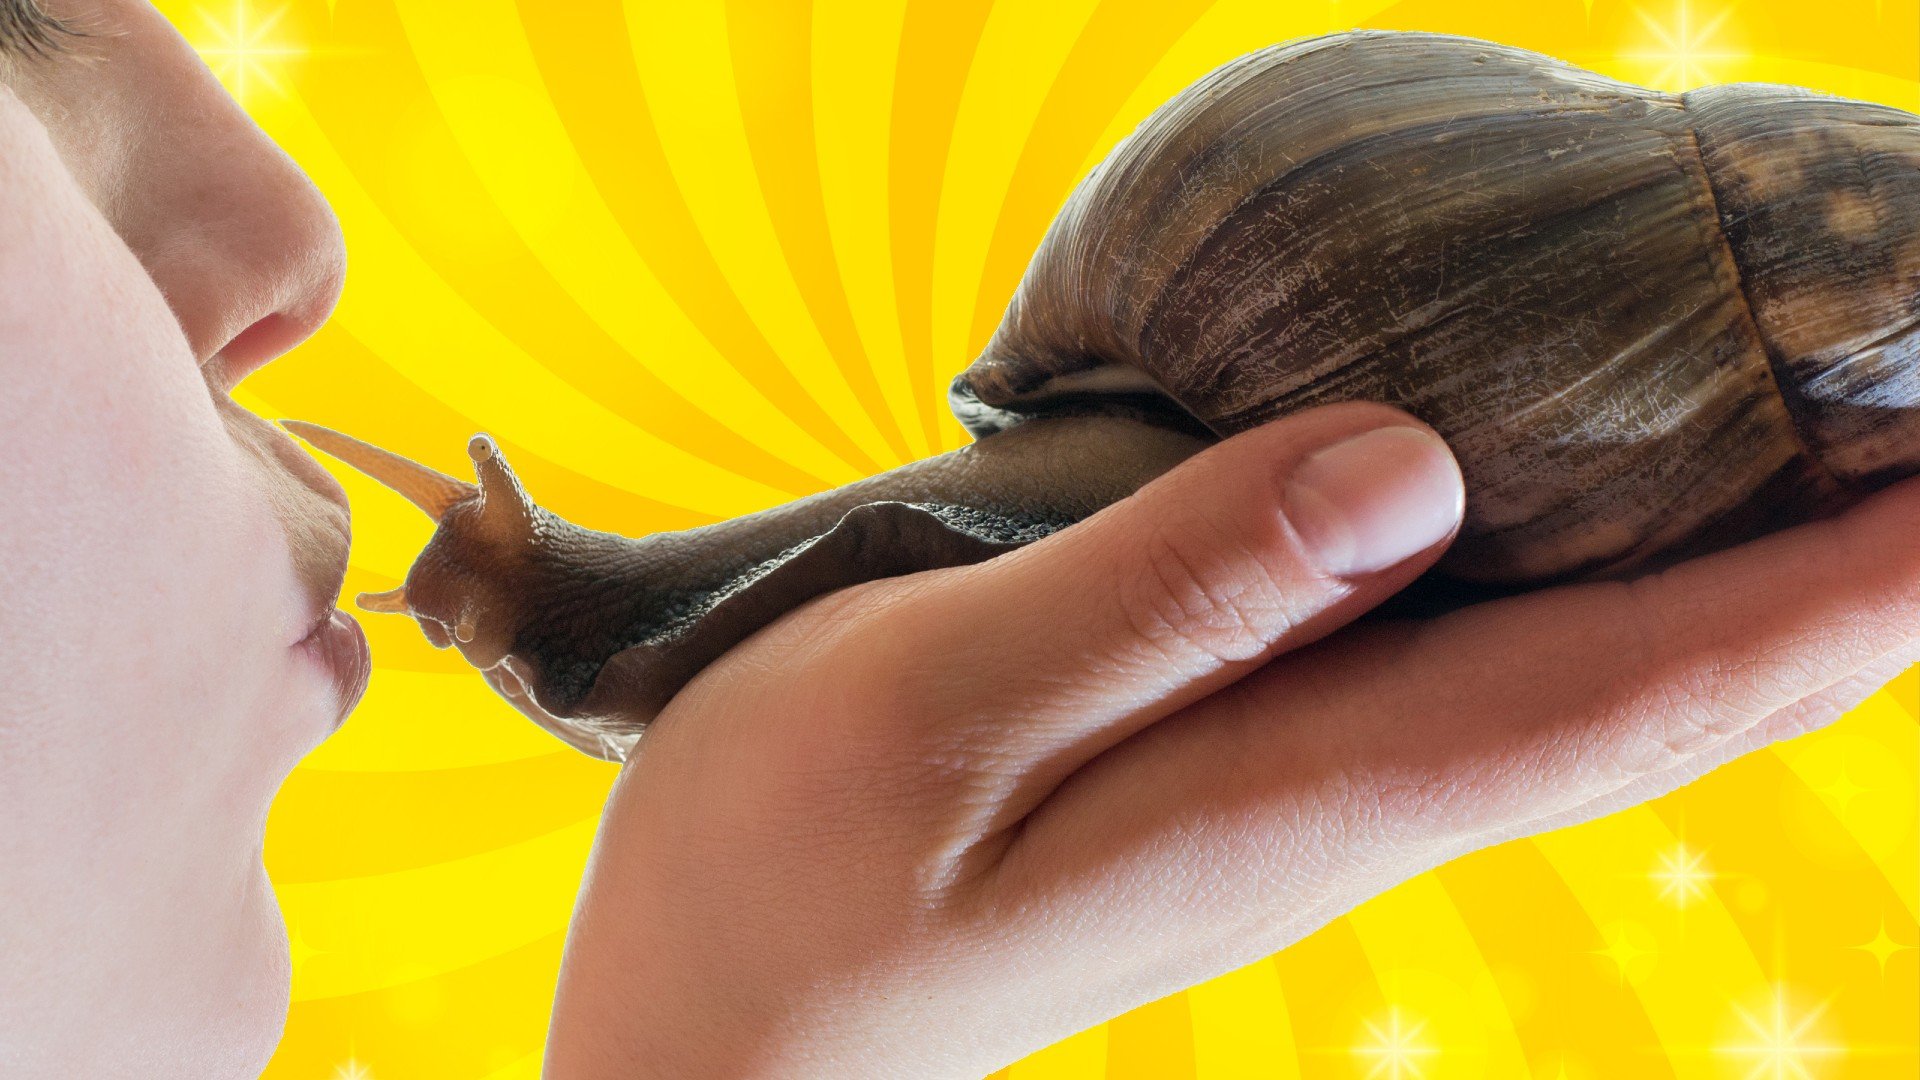 giant sea snails